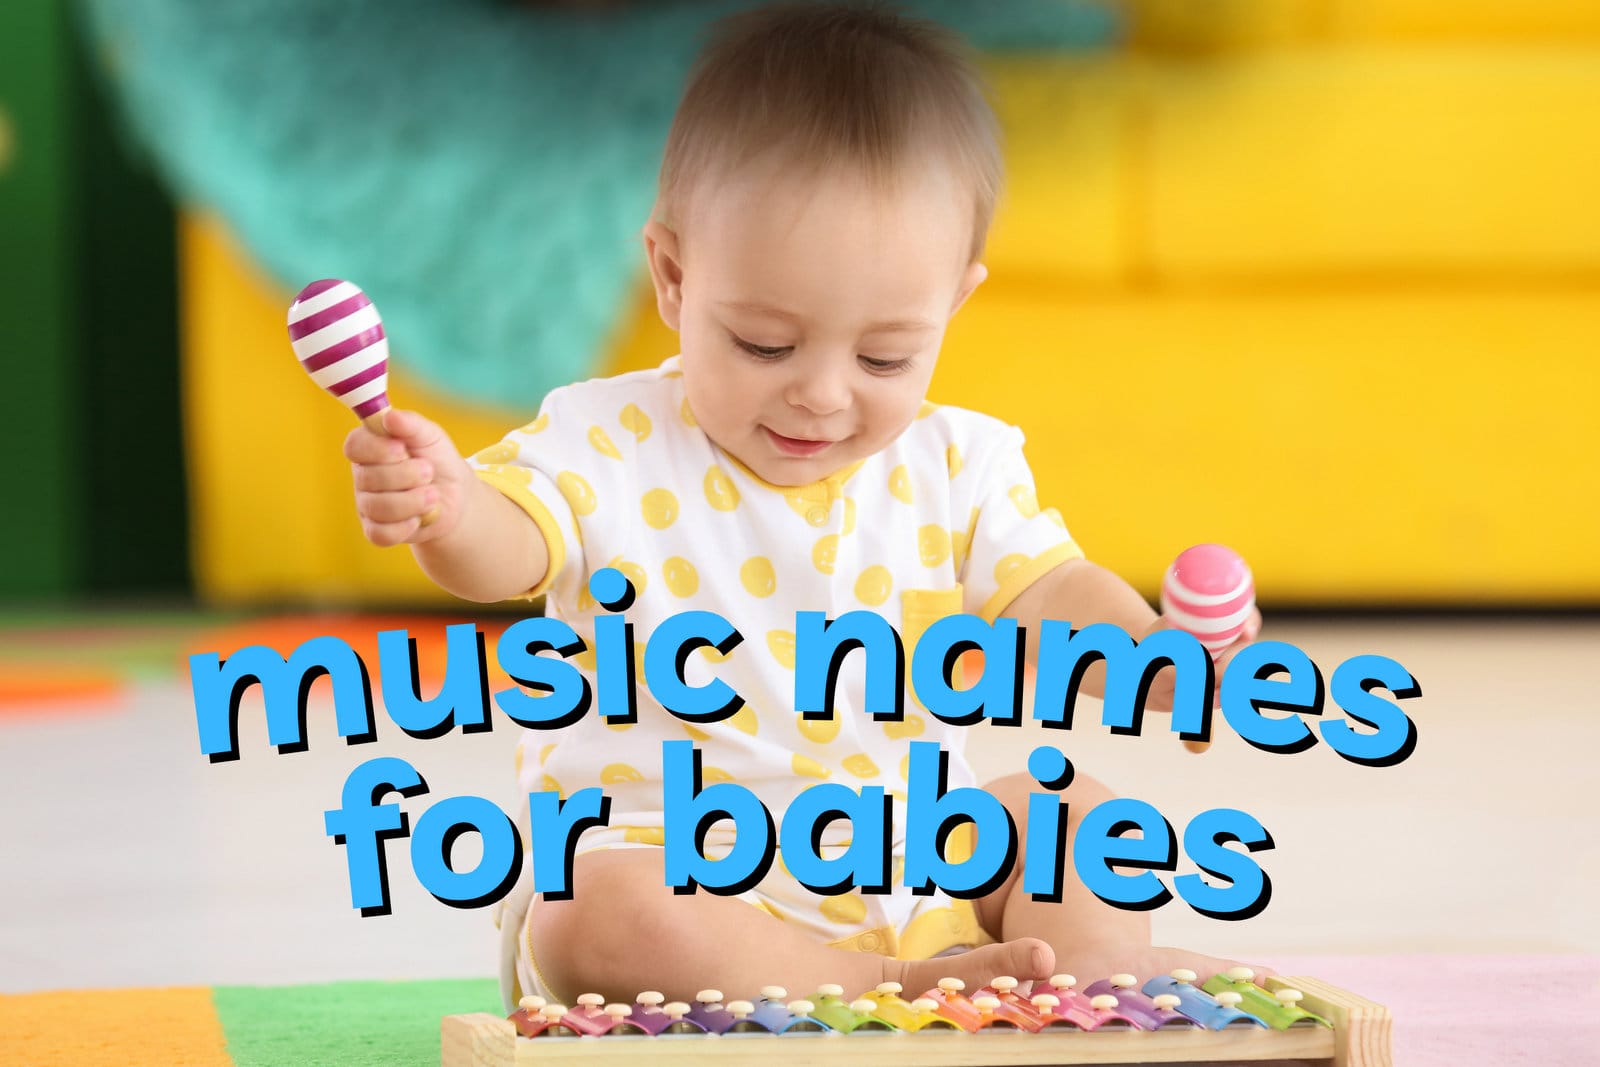 Baby names from musical instruments at ClickBabyNames com